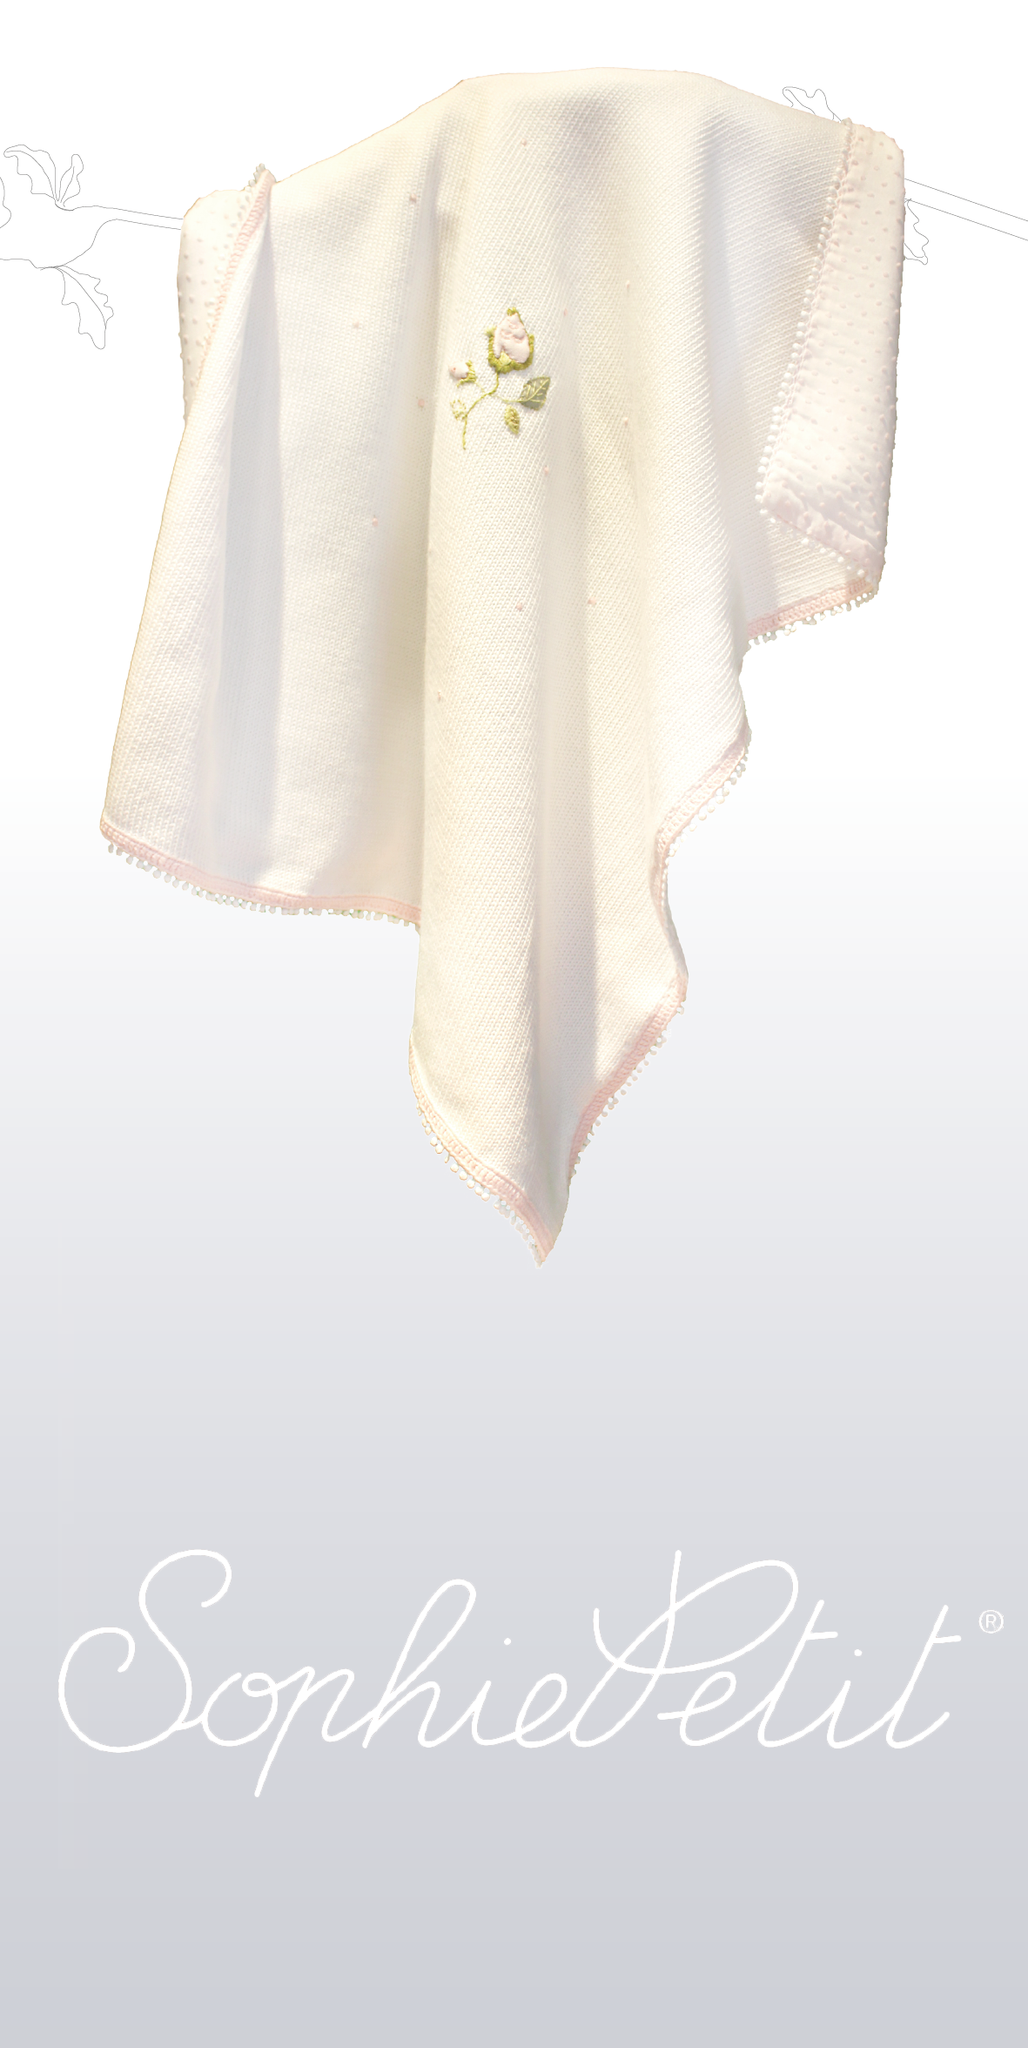 Bloom - Cradle cotton blanket cod 5700